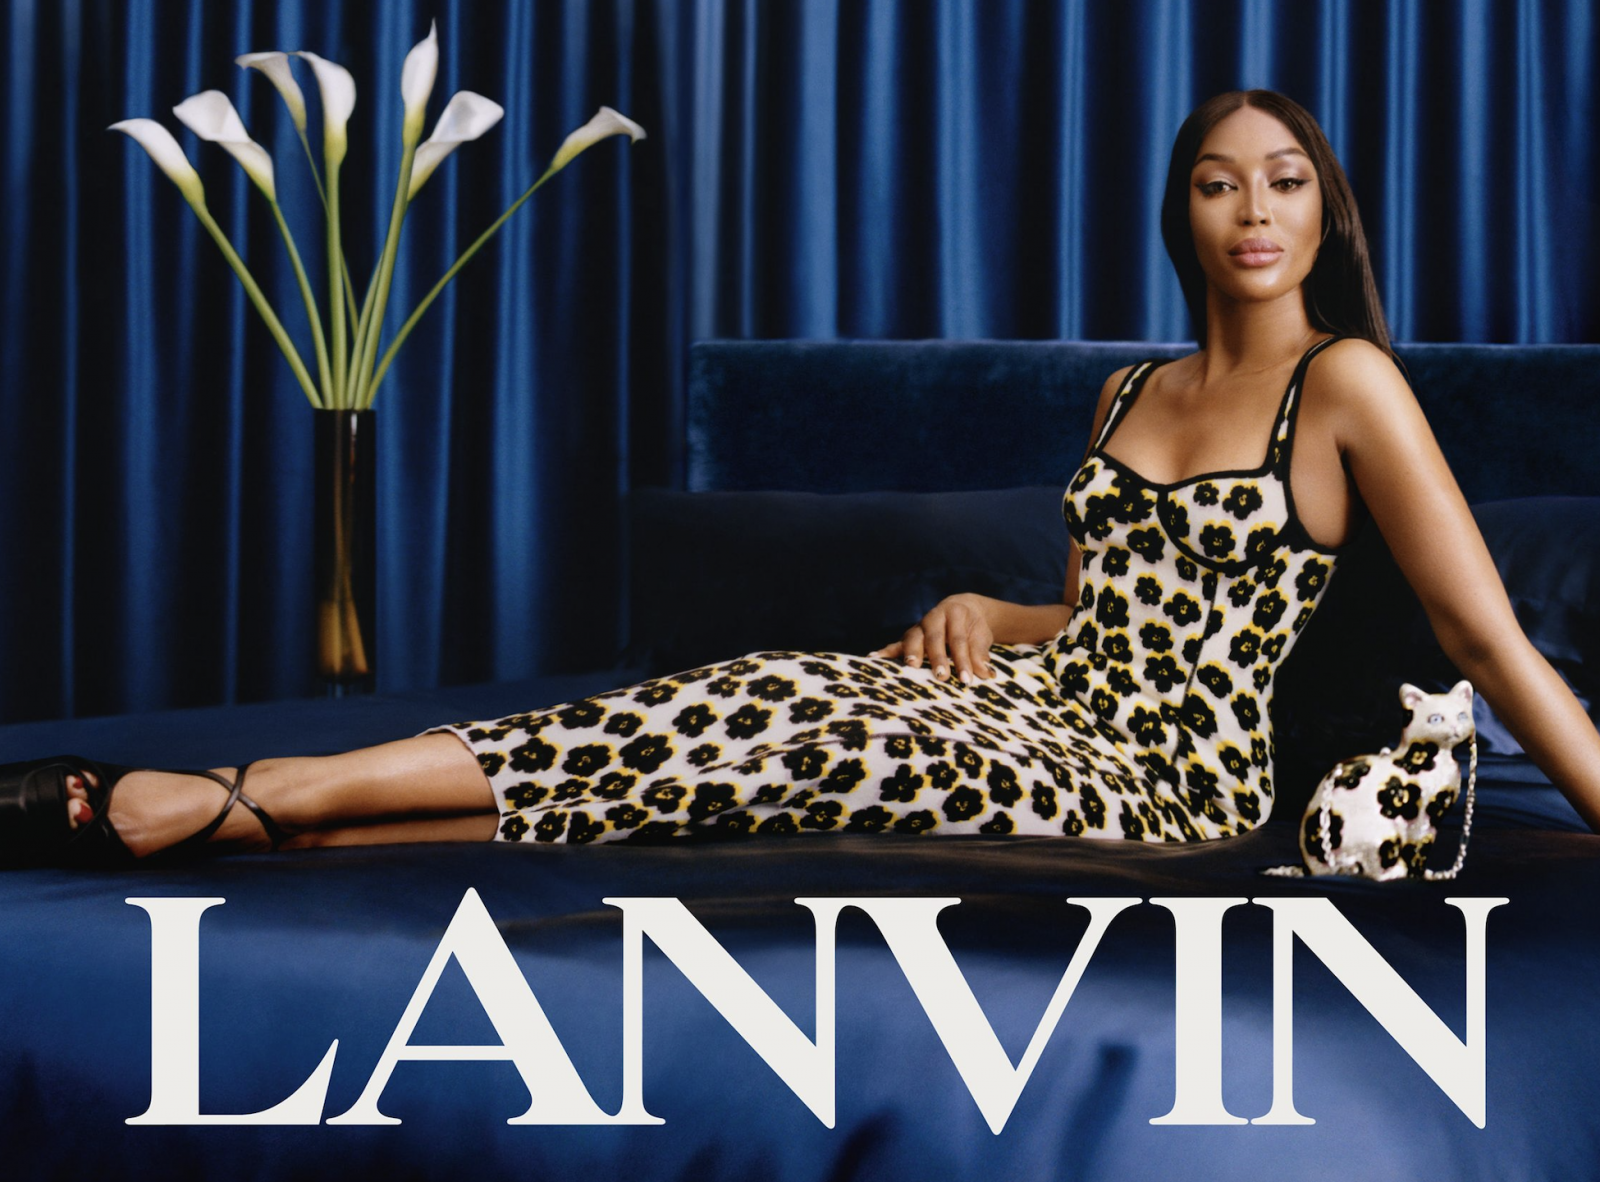 Lanvin ad starring Naomi Campbell